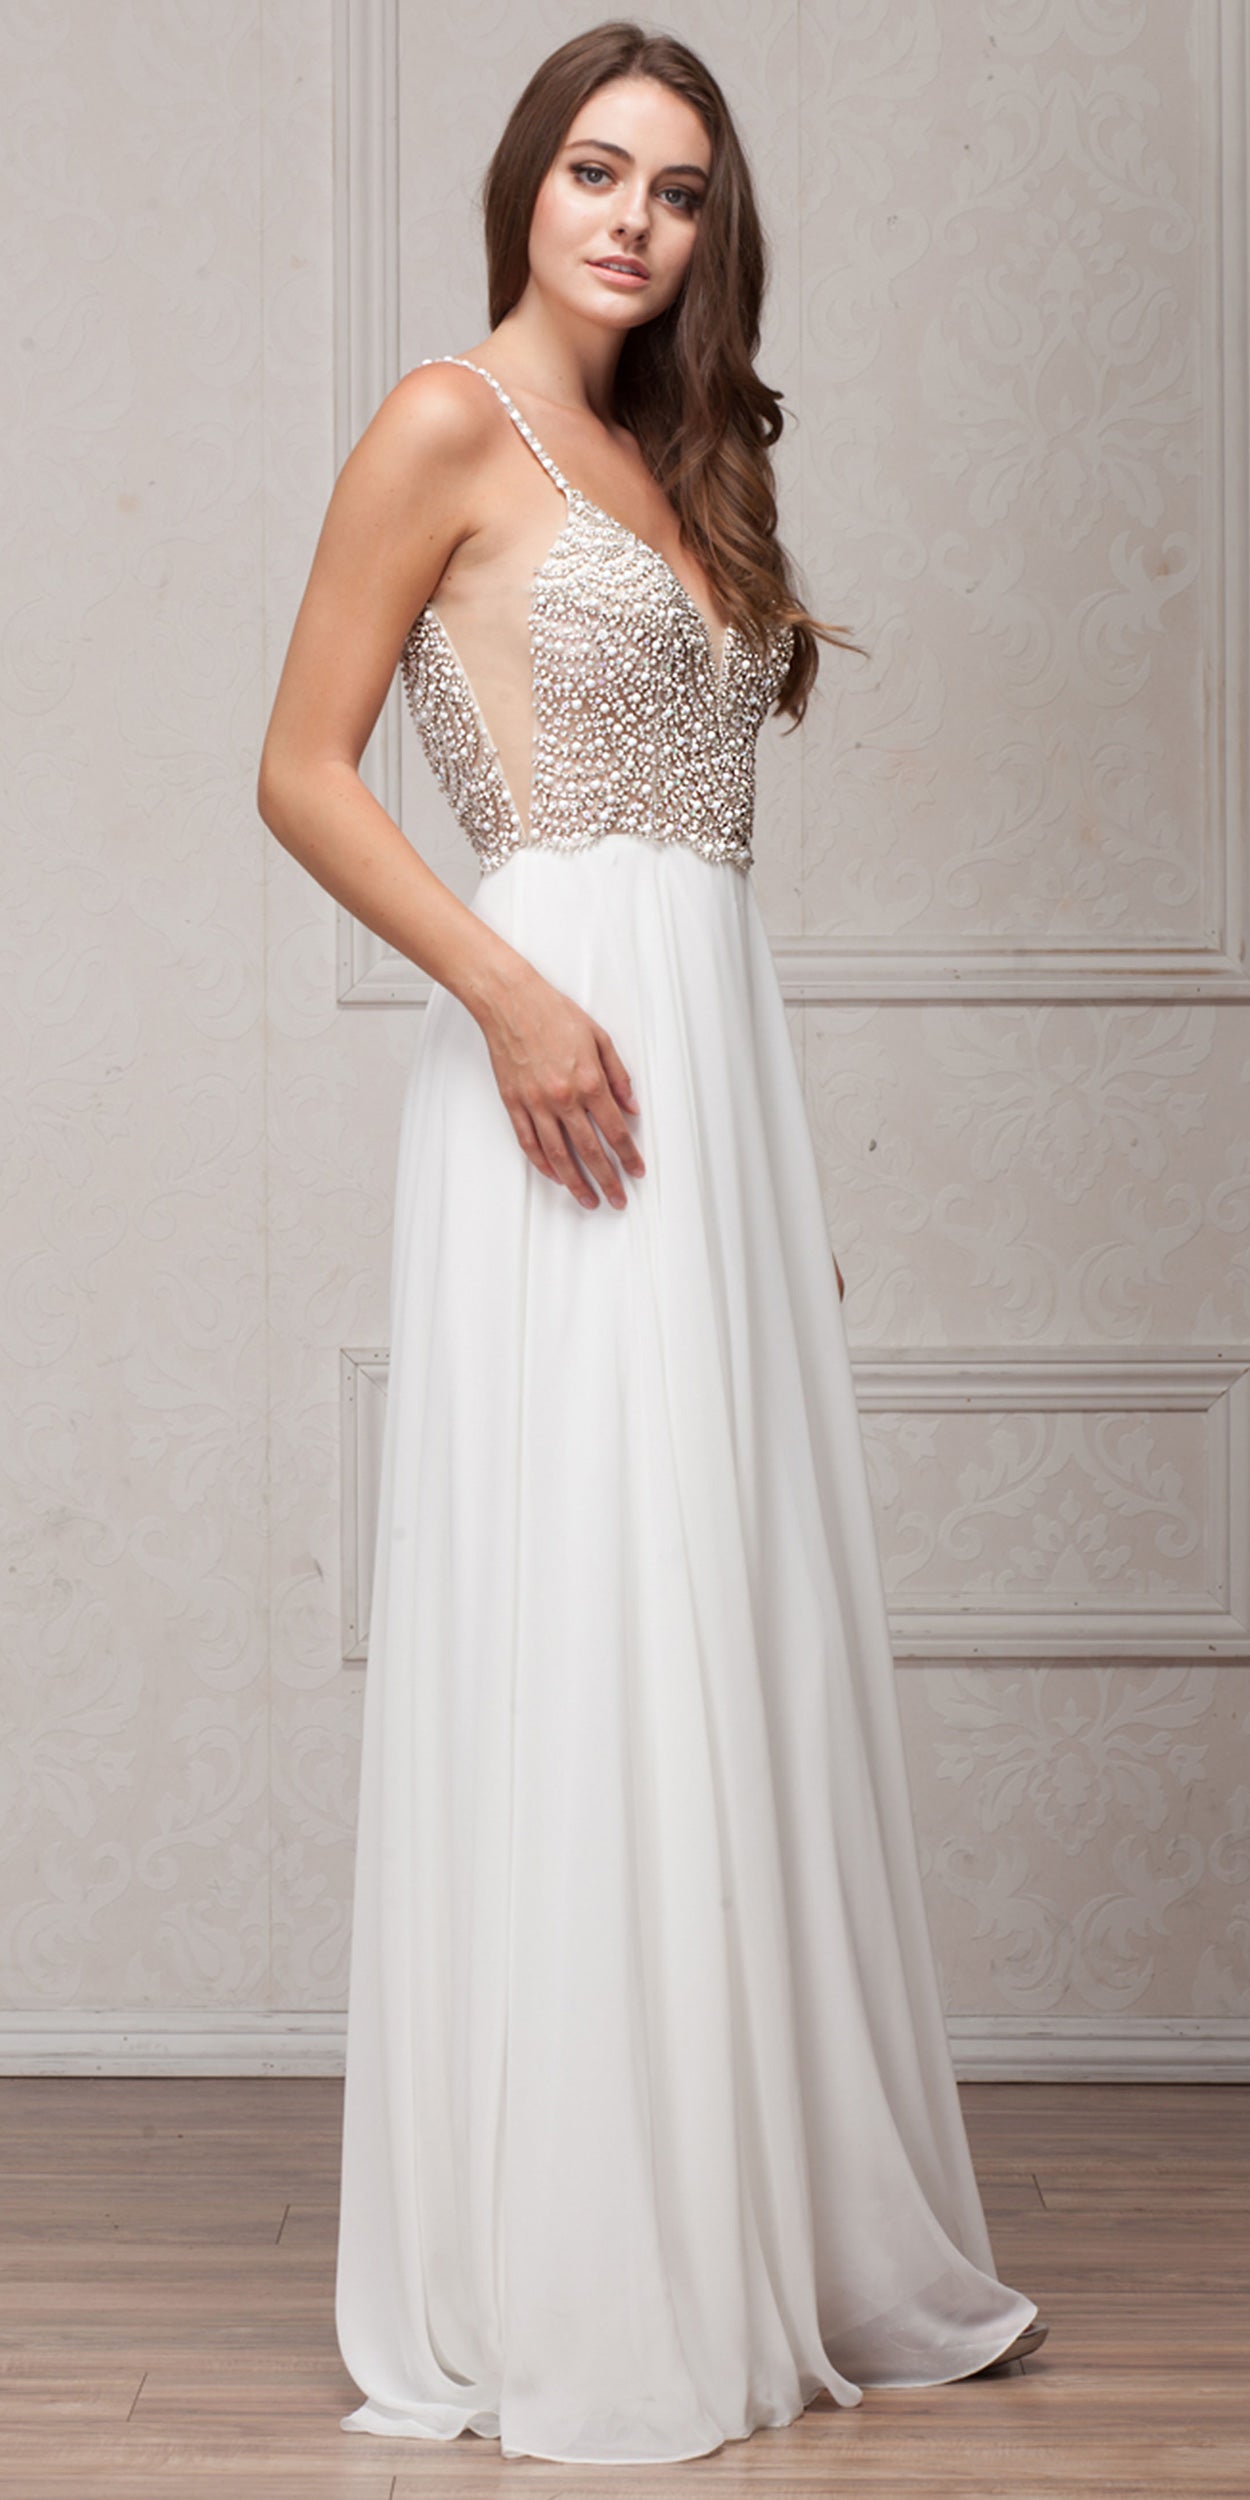 Image of Bejeweled Bodice V-neck Spaghetti Straps Formal Prom Dress in an alternative image